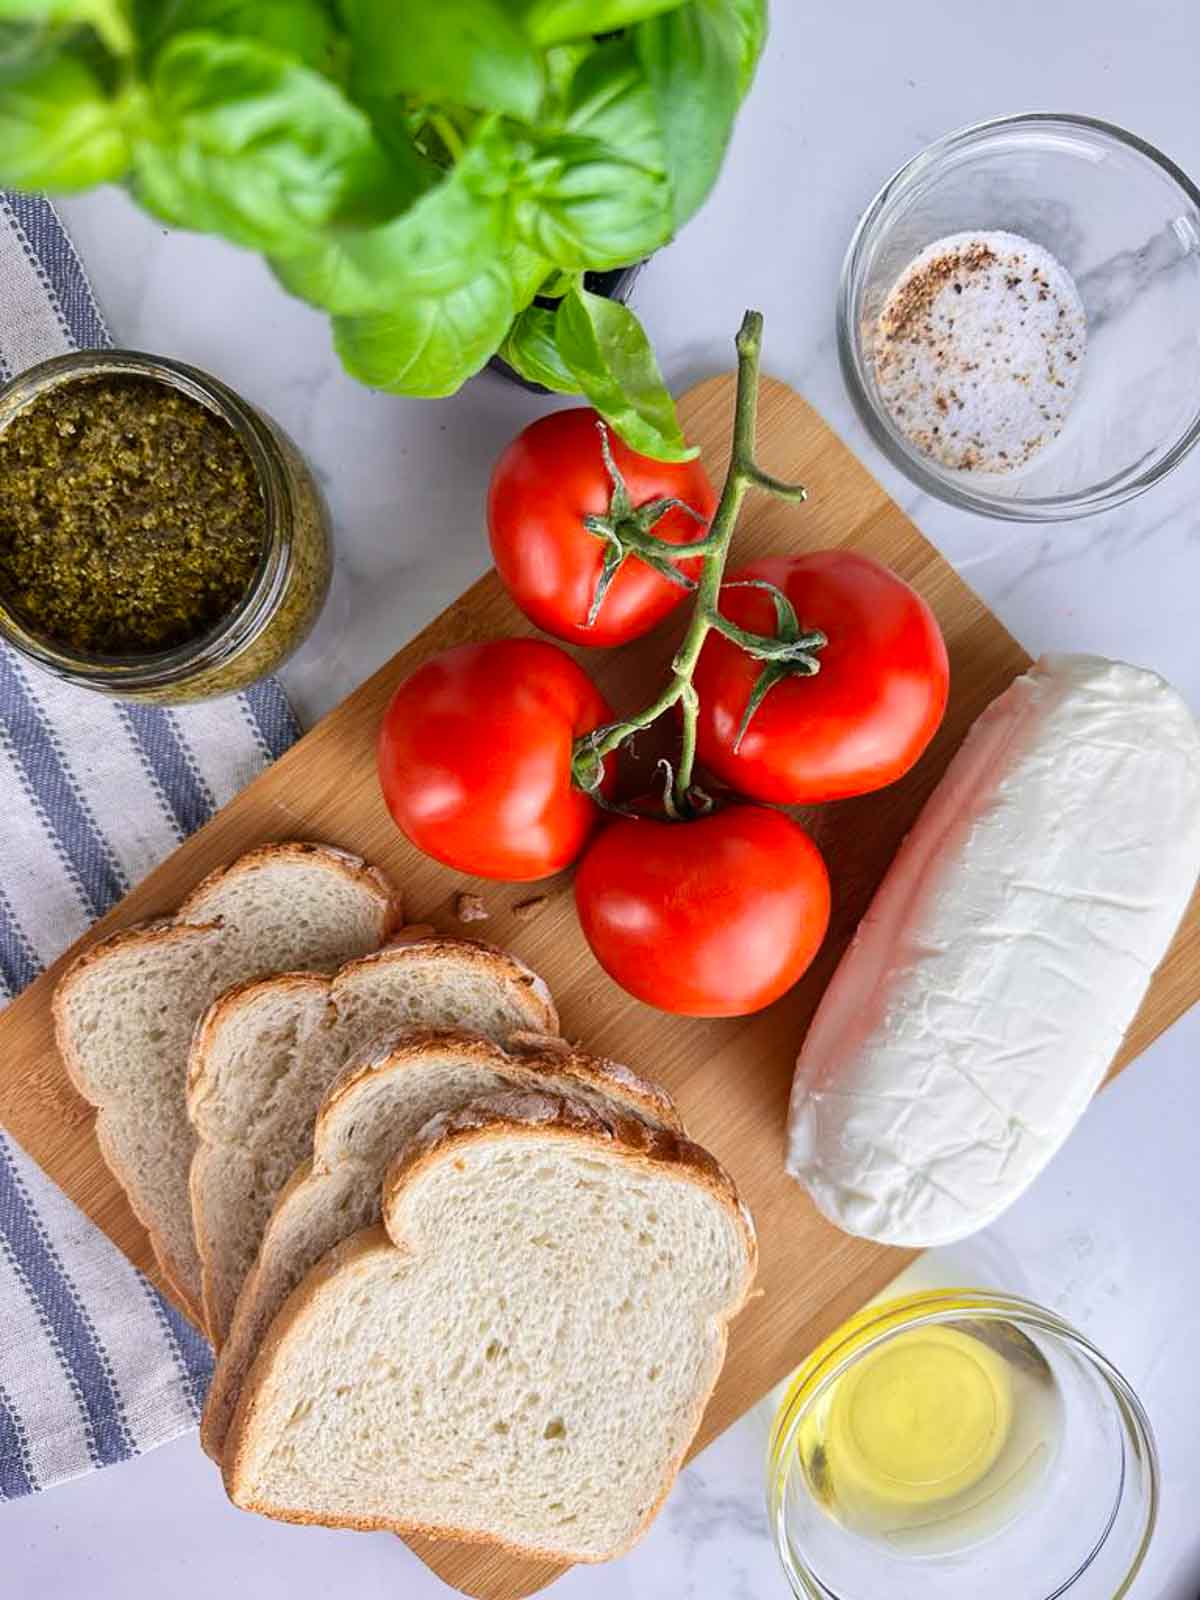 Ingredients for Caprese Panini Sandwich with Pesto: Bread, Tomatoes, Basil, Mozzarella, Pesto, Olive Oil, Salt and Pepper